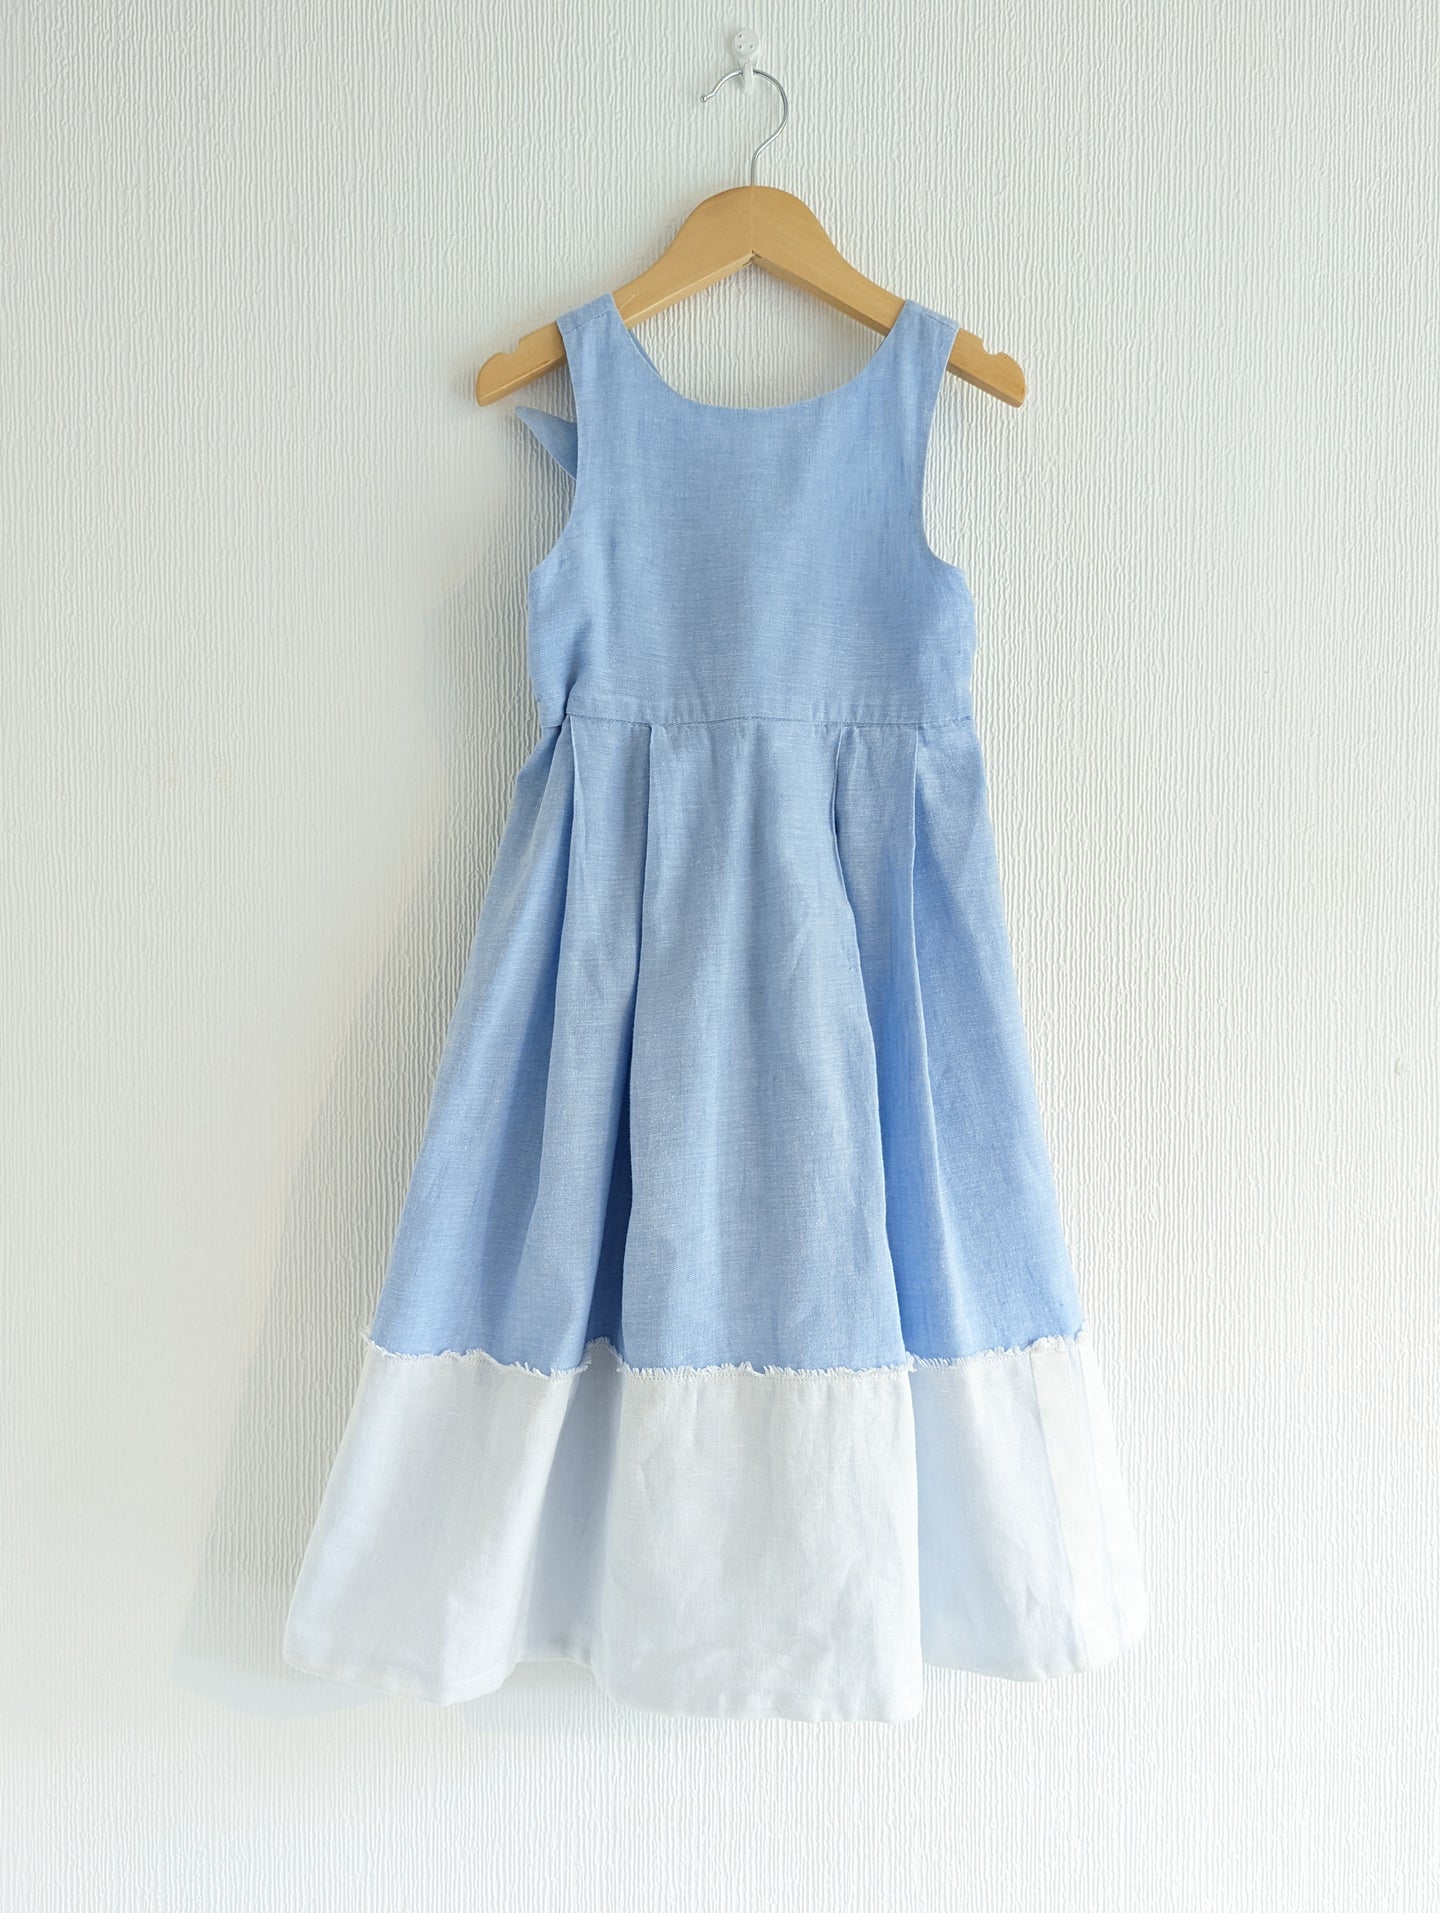 Stunning Jacadi Linen Pinafore Dress - 5 Years